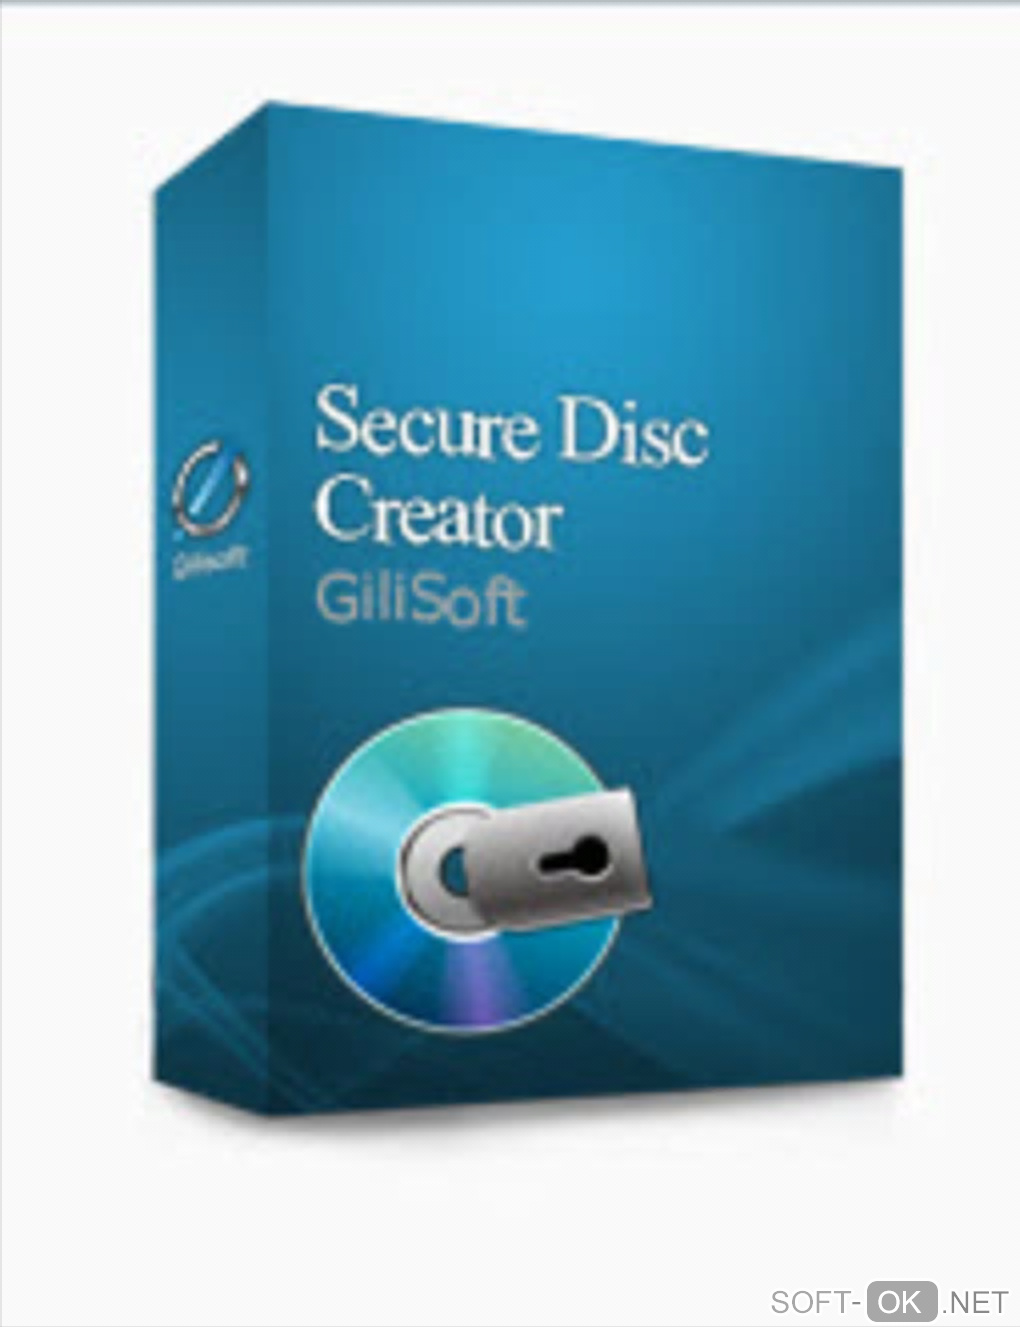 The appearance "GiliSoft Secure Disc Creator"